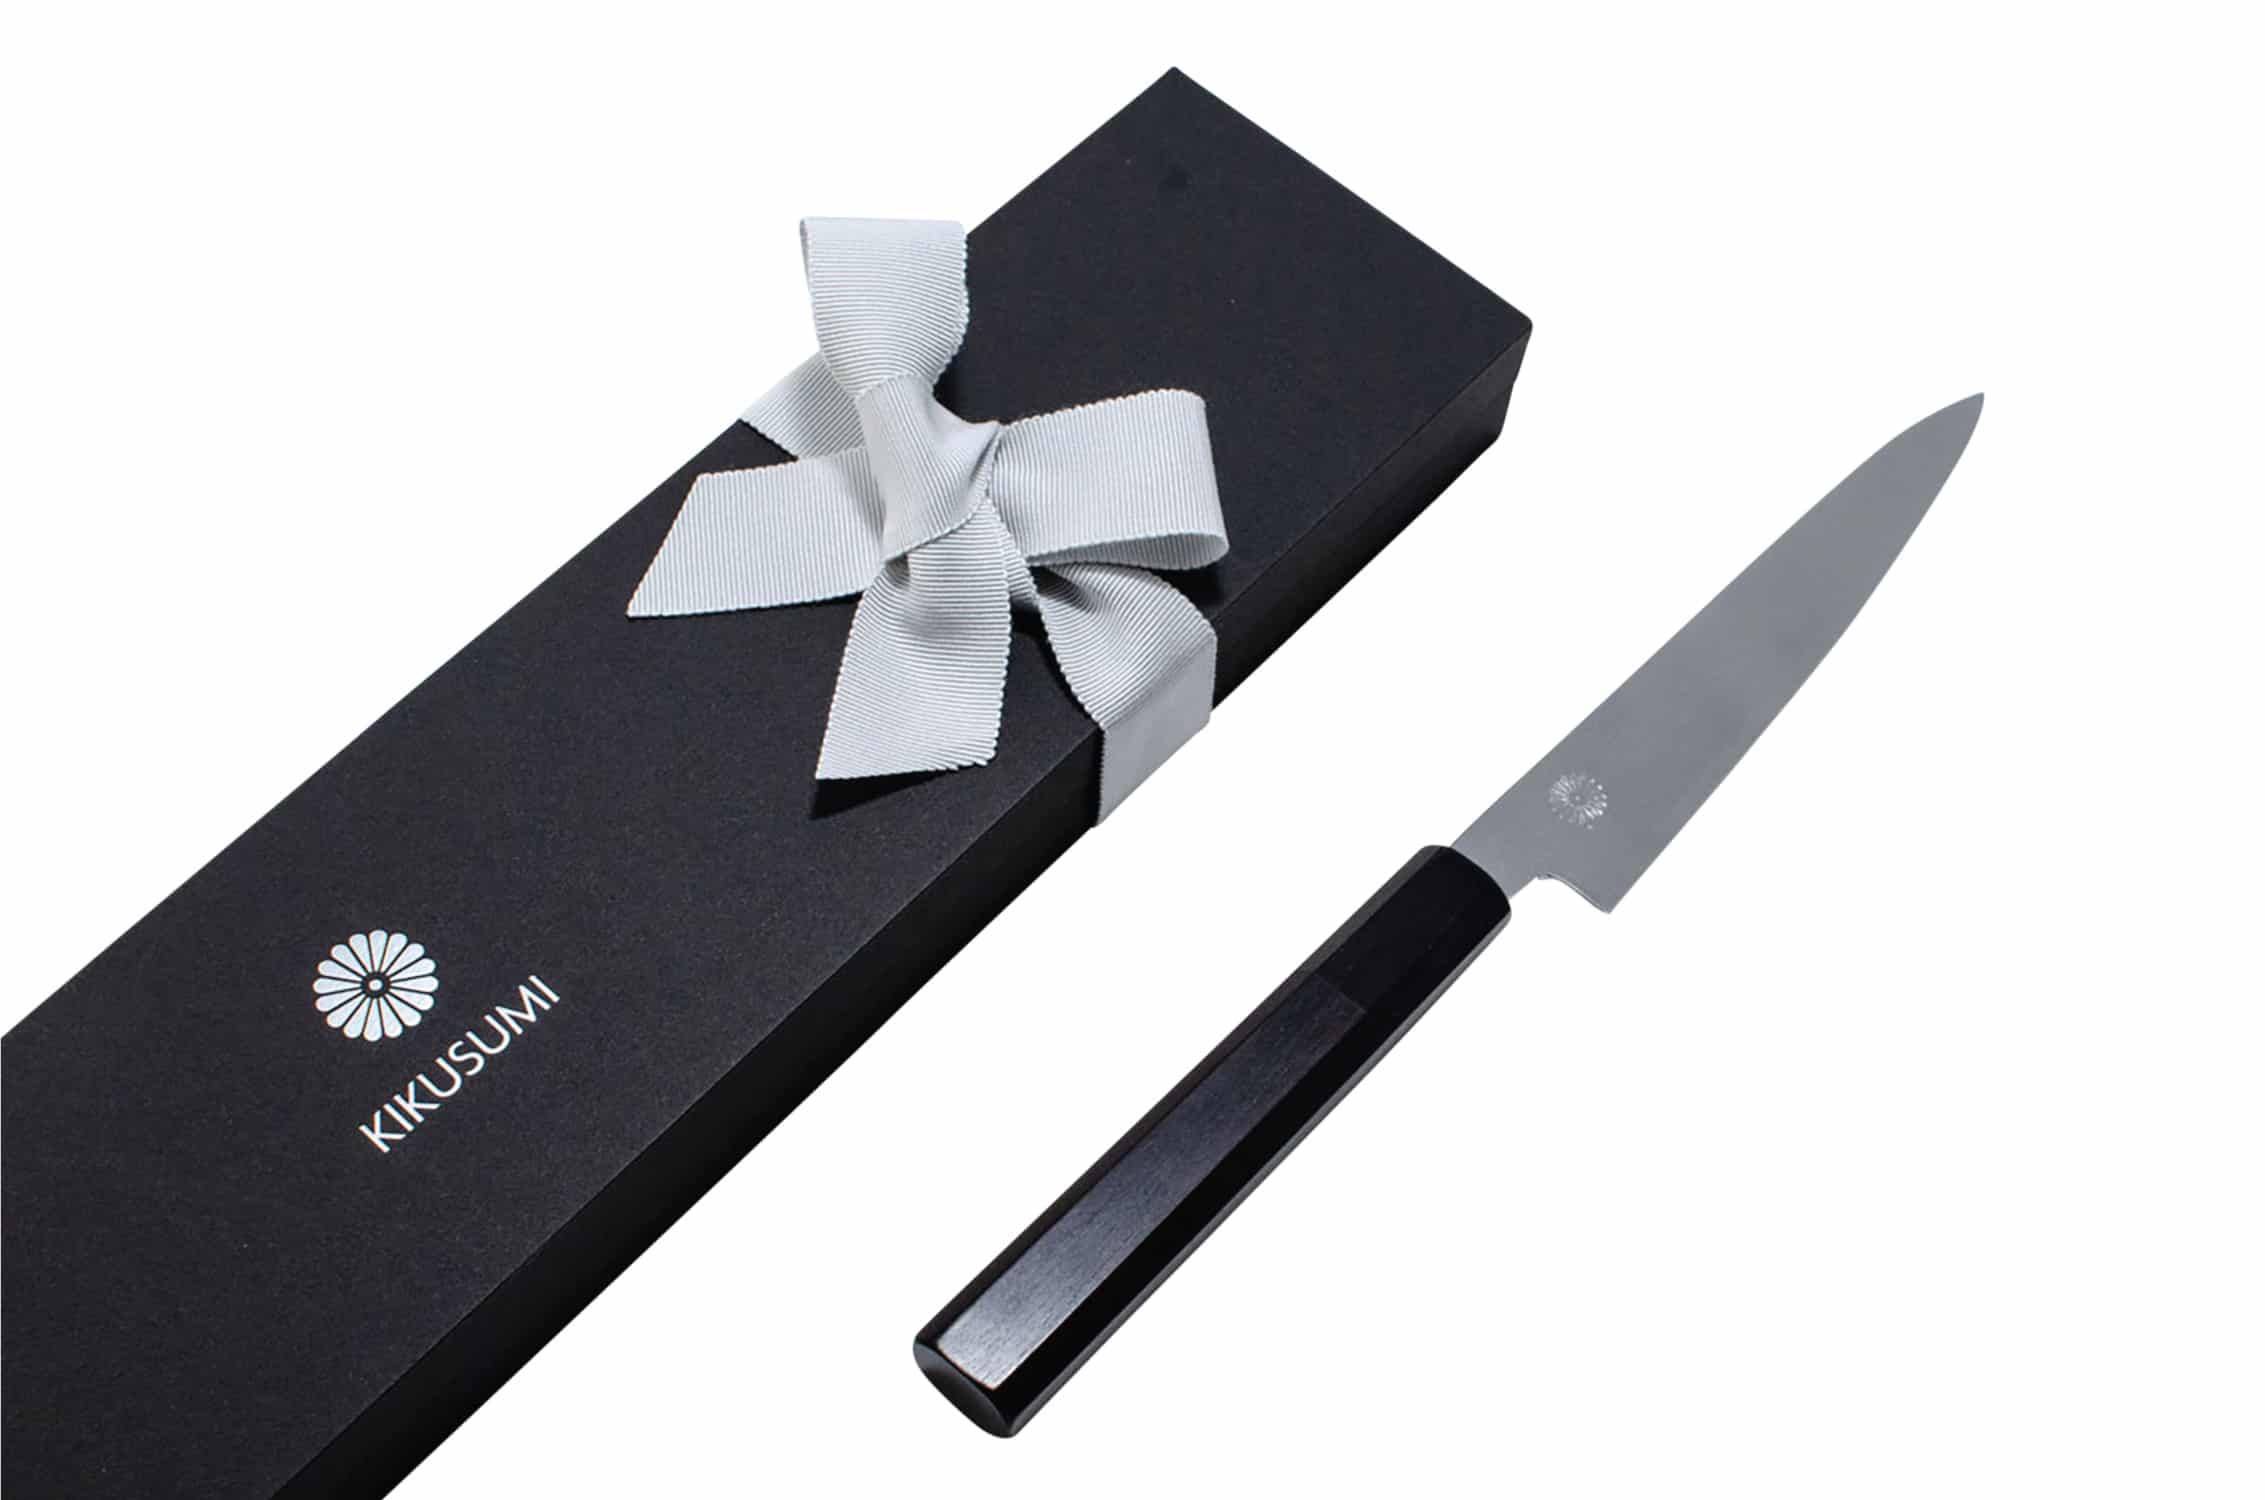 Kikusumi Black Ceramic Collection 6 Piece Chef Knife Gift Set Bundle - SUMI  Black Handle - Kikusumi Knife SHOP